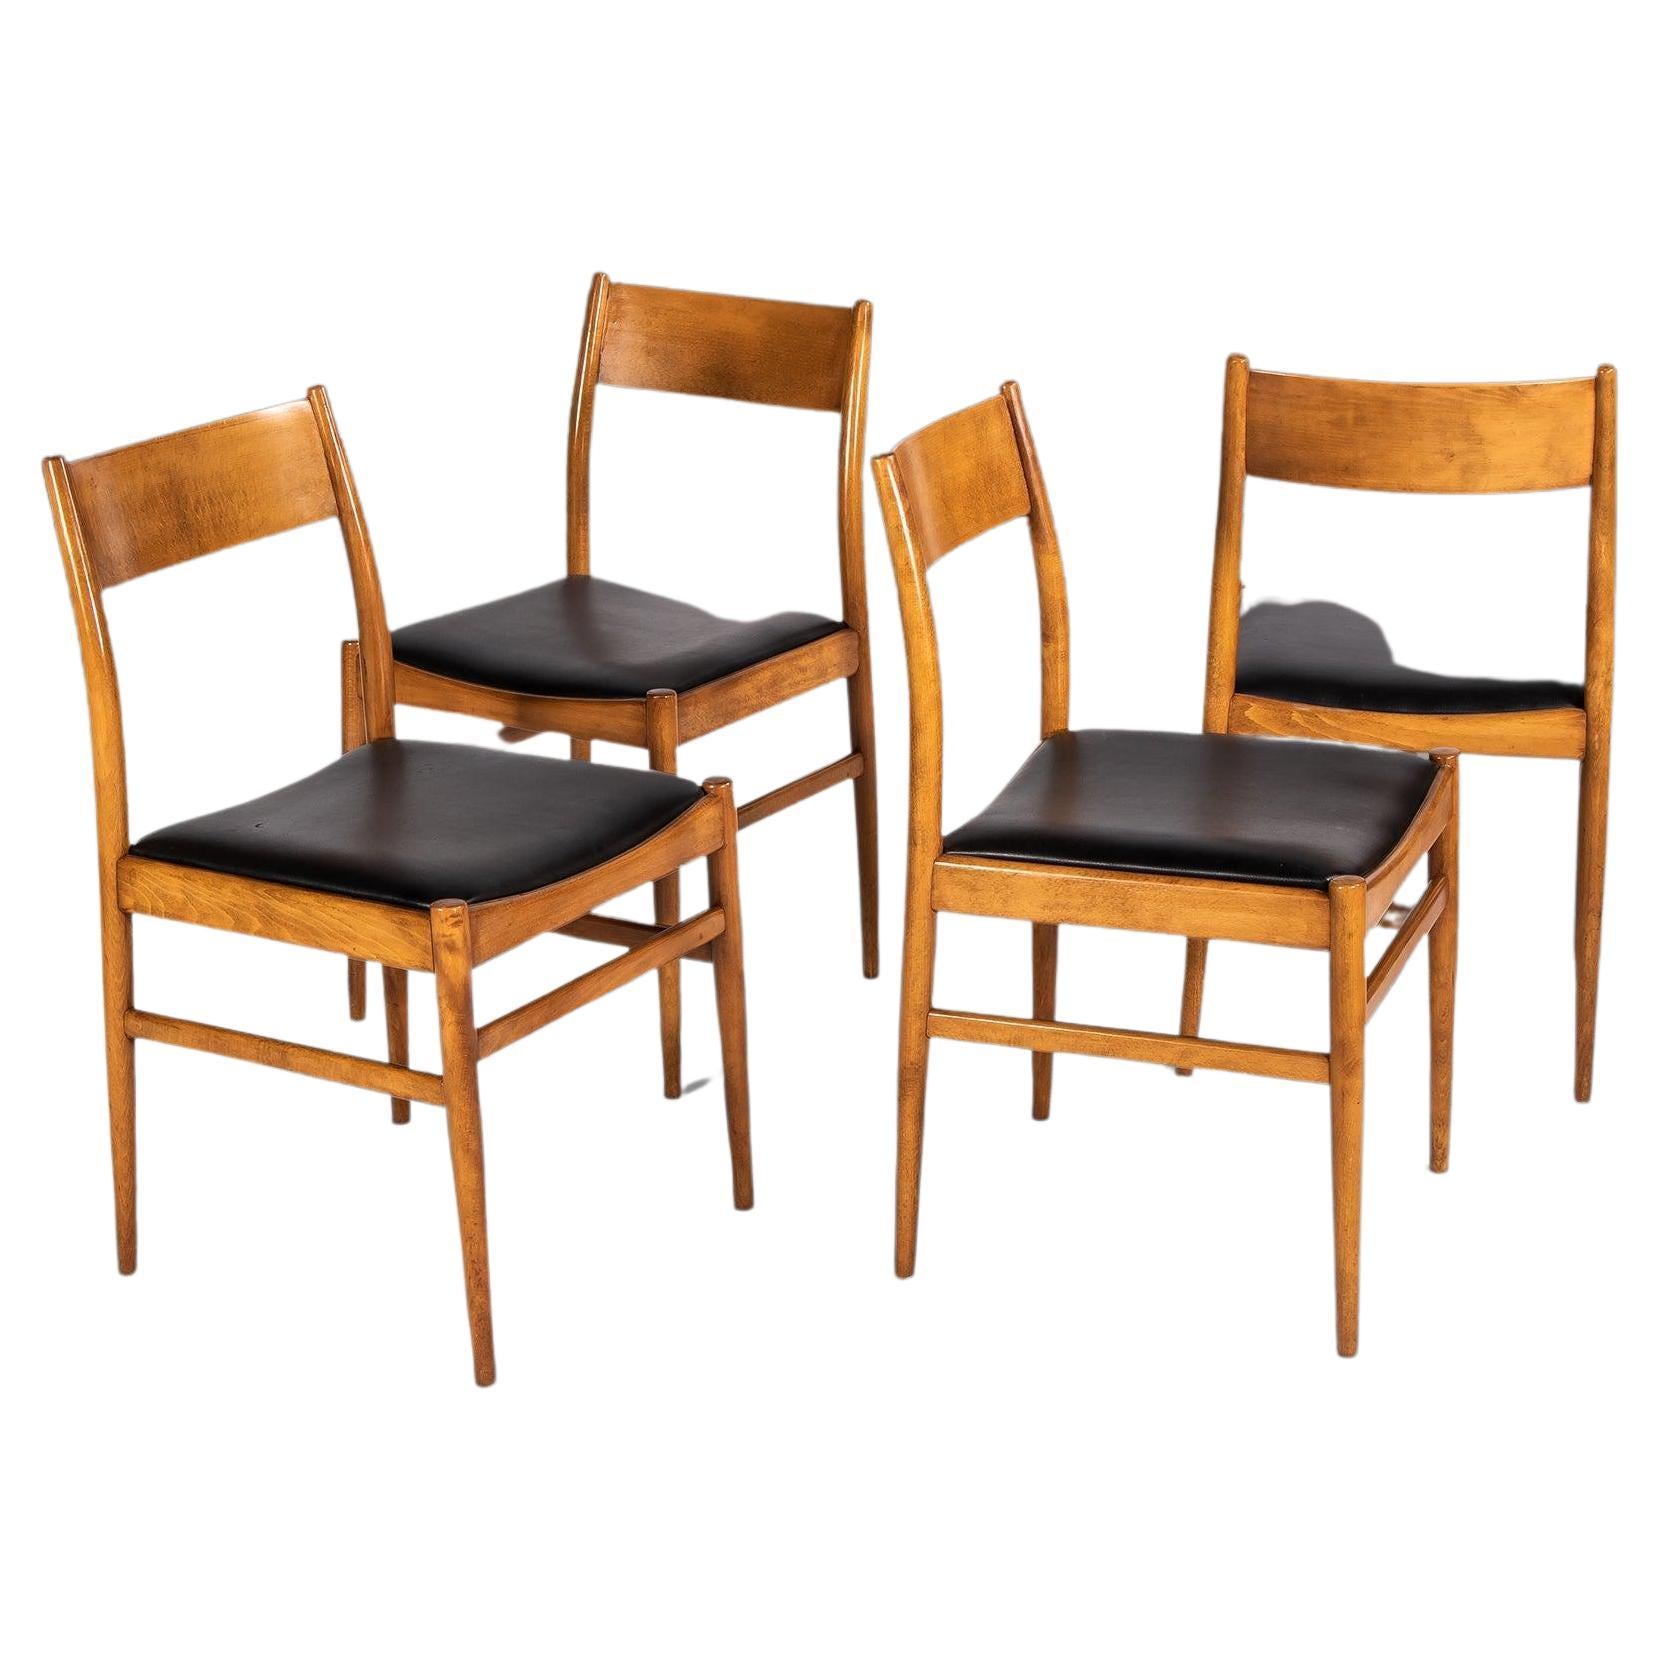 Set of Four '4' Mid Century Danish Modern Contoured Oak Dining Chairs, c. 1960's